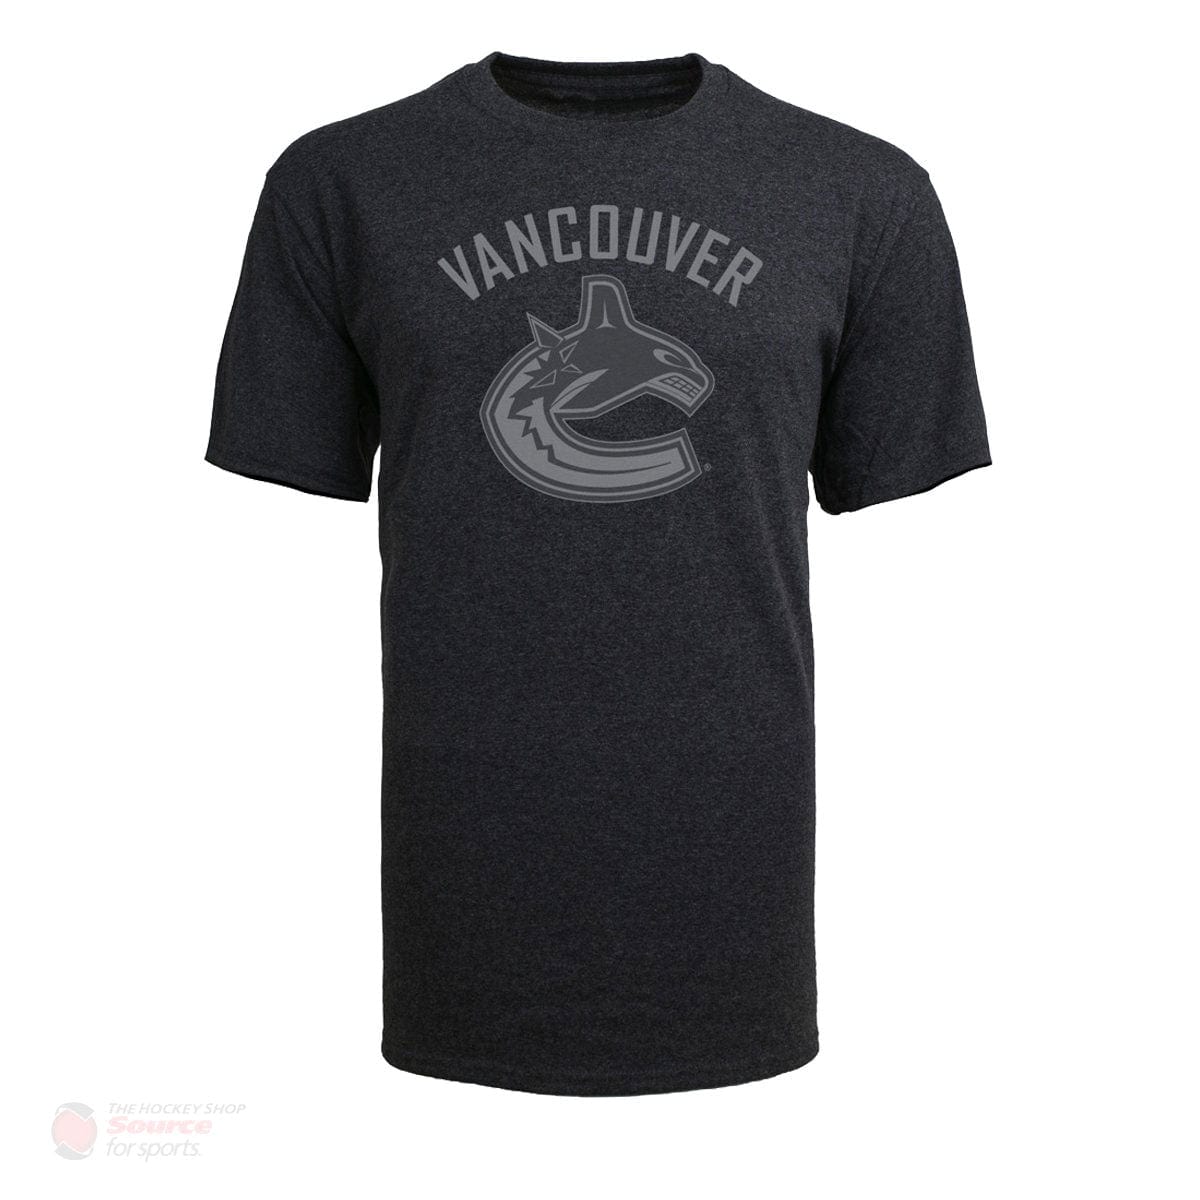 Vancouver Canucks 47 Brand Carbon Mens Shirt